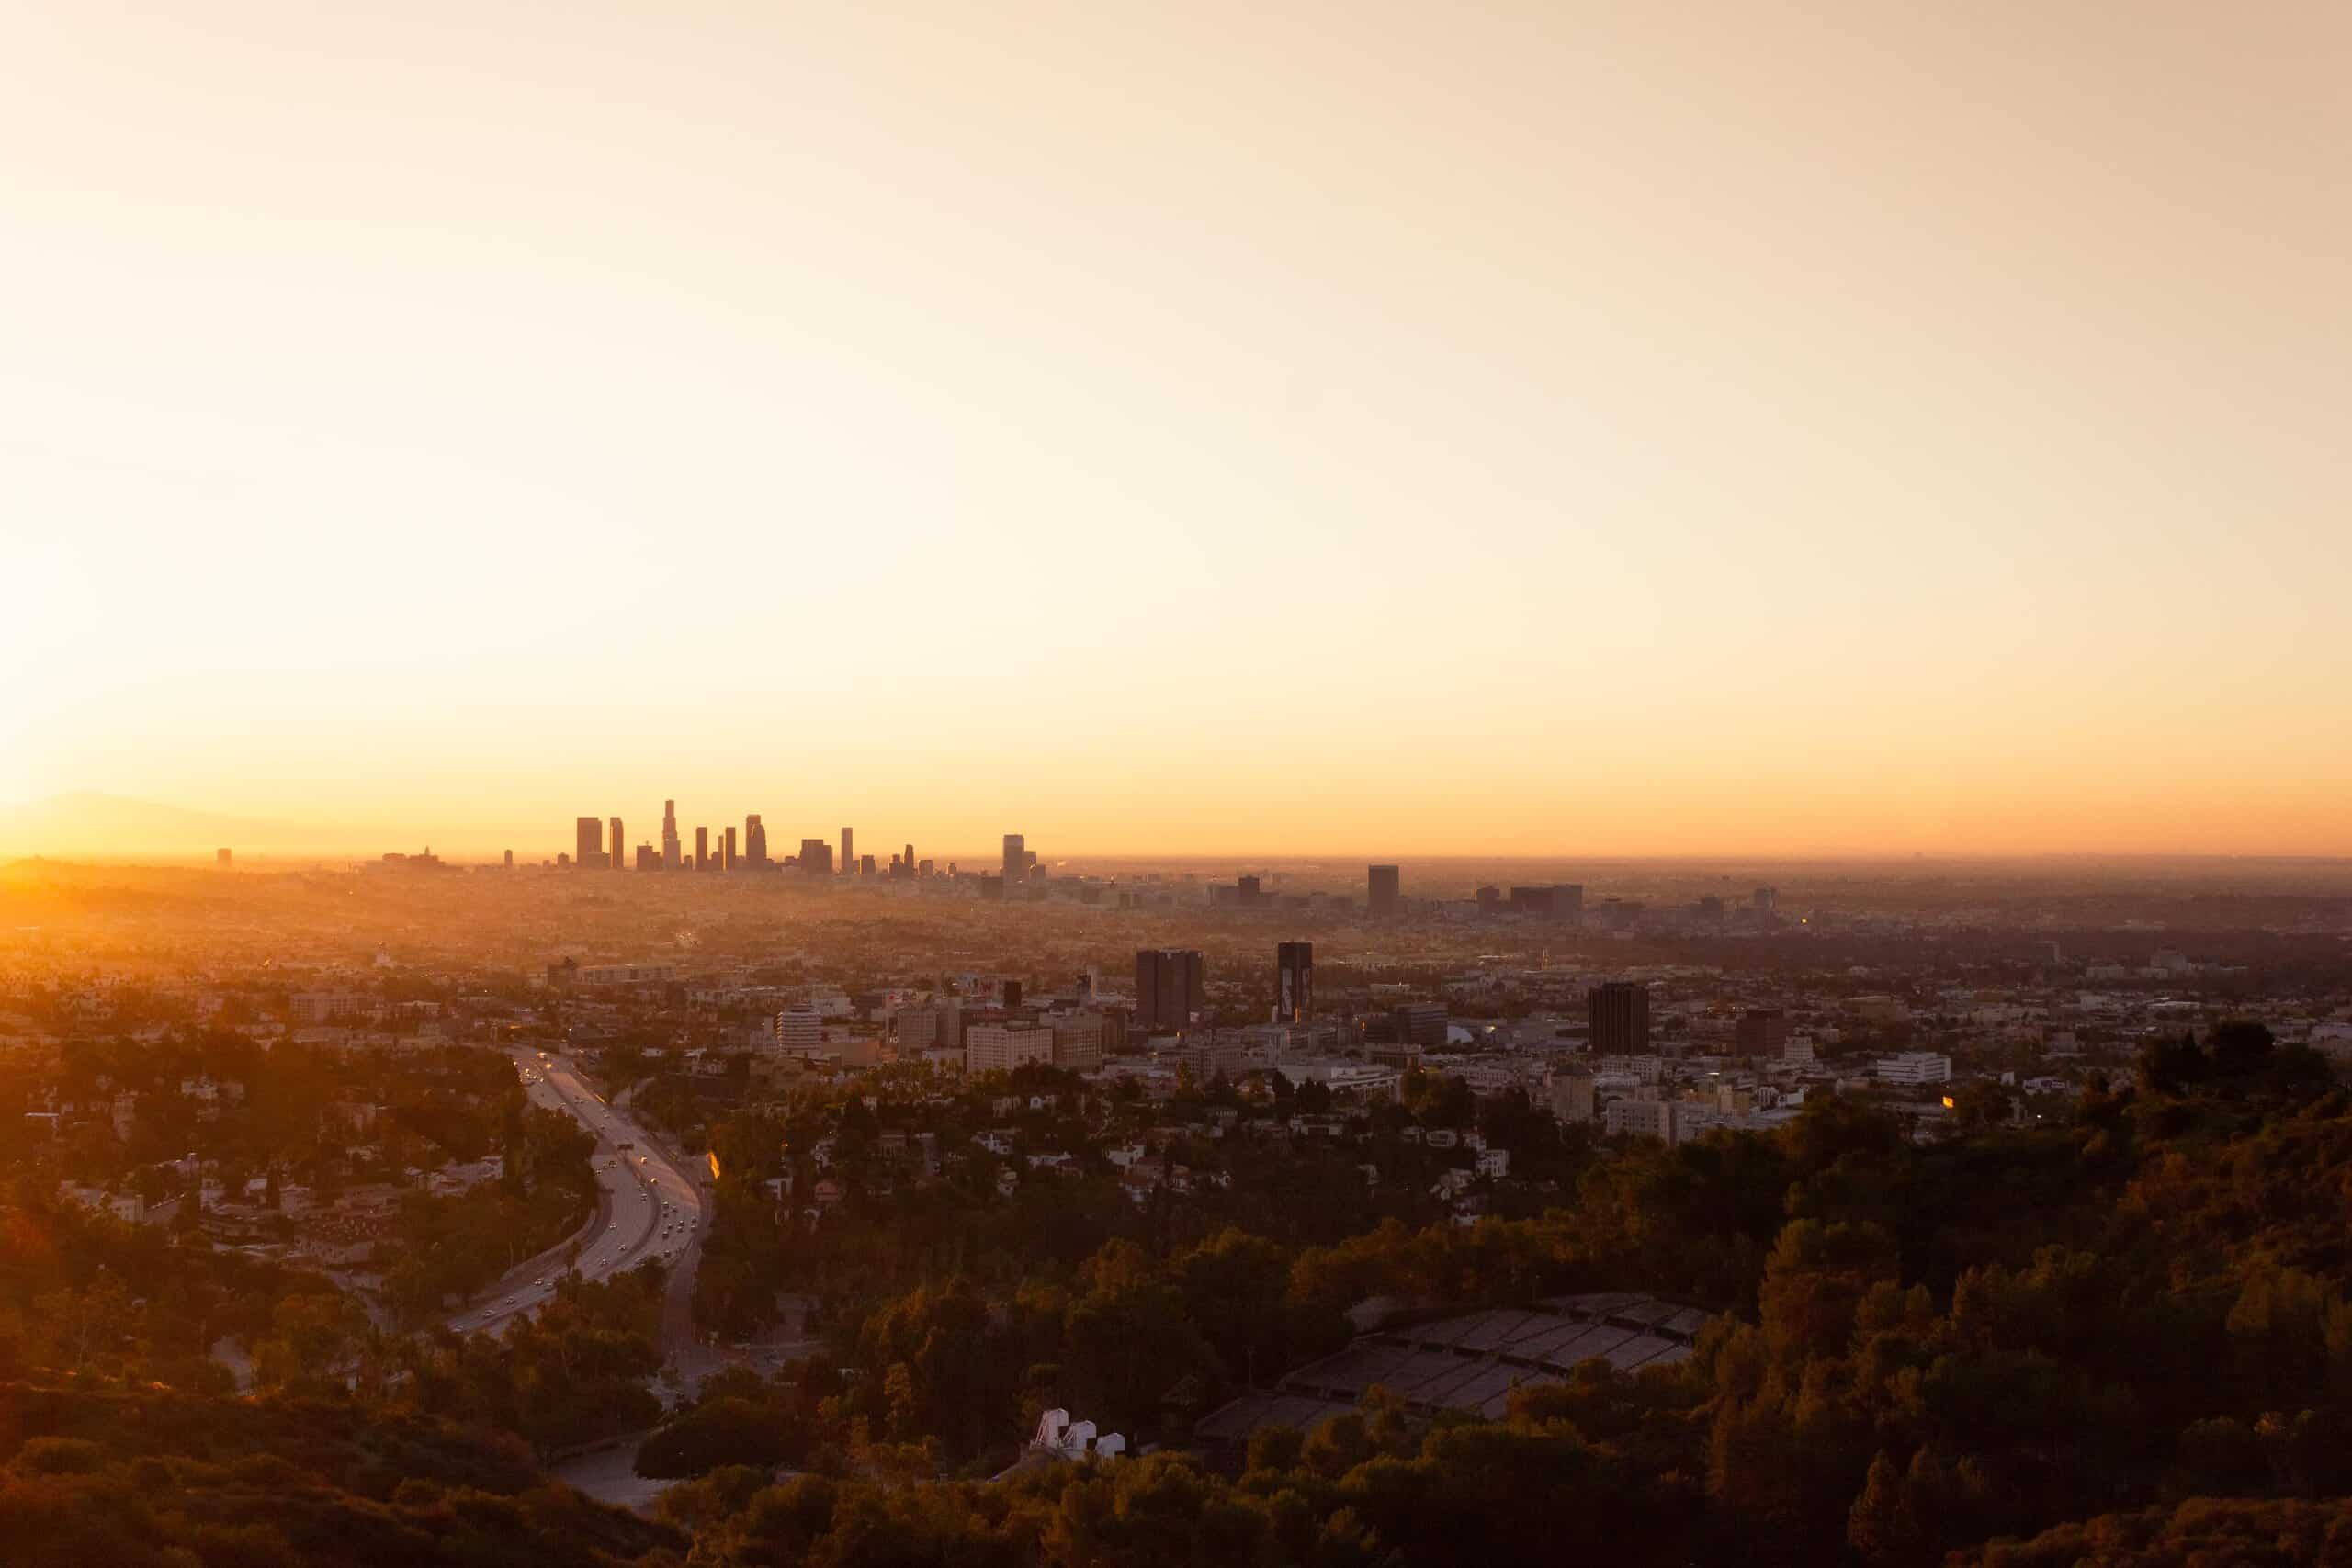 Los Angeles by Chad Davis